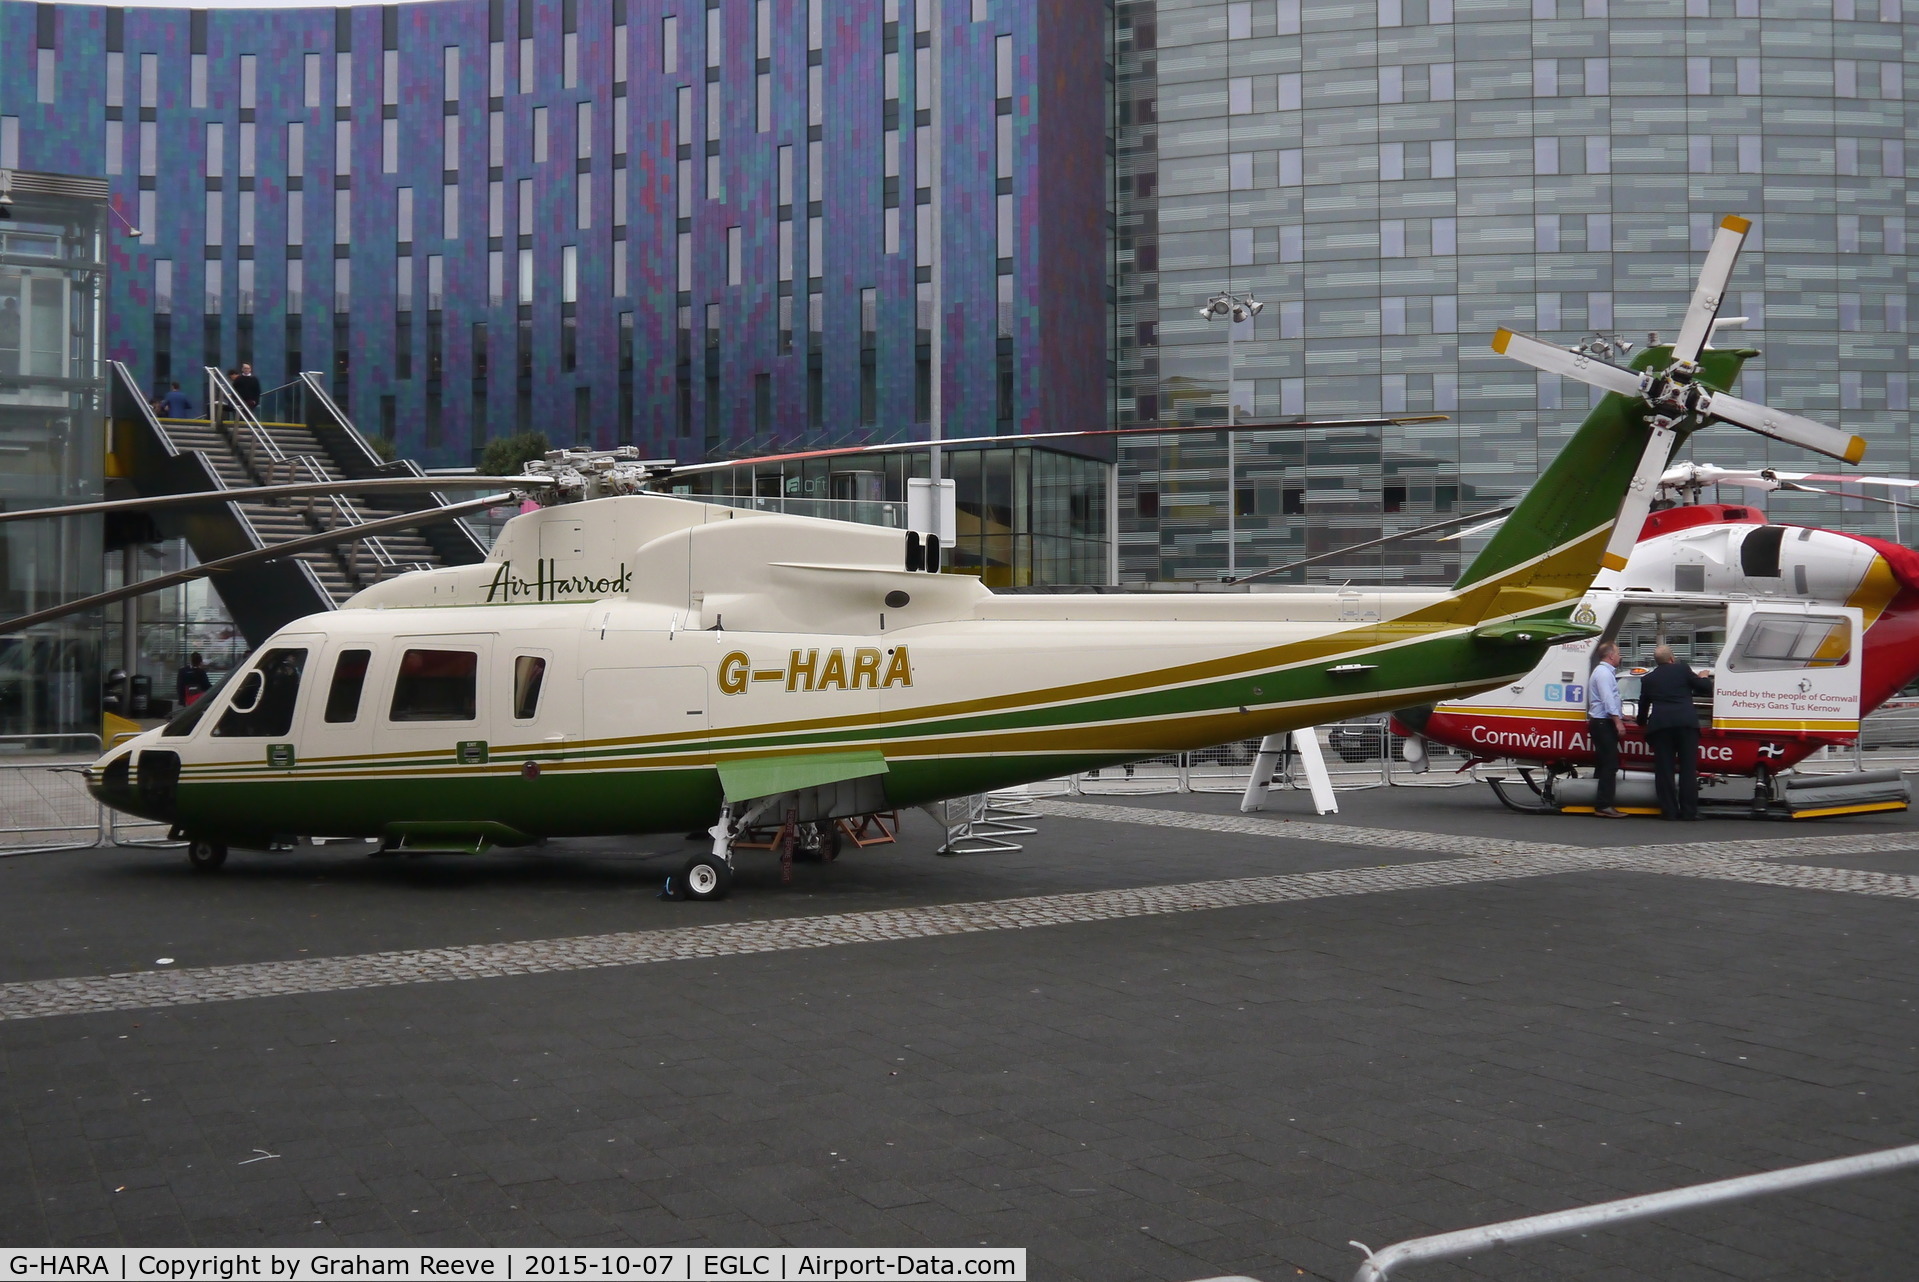 G-HARA, 2007 Sikorsky S-76C C/N 760684, Parked at Helitech 2015, Excel London.